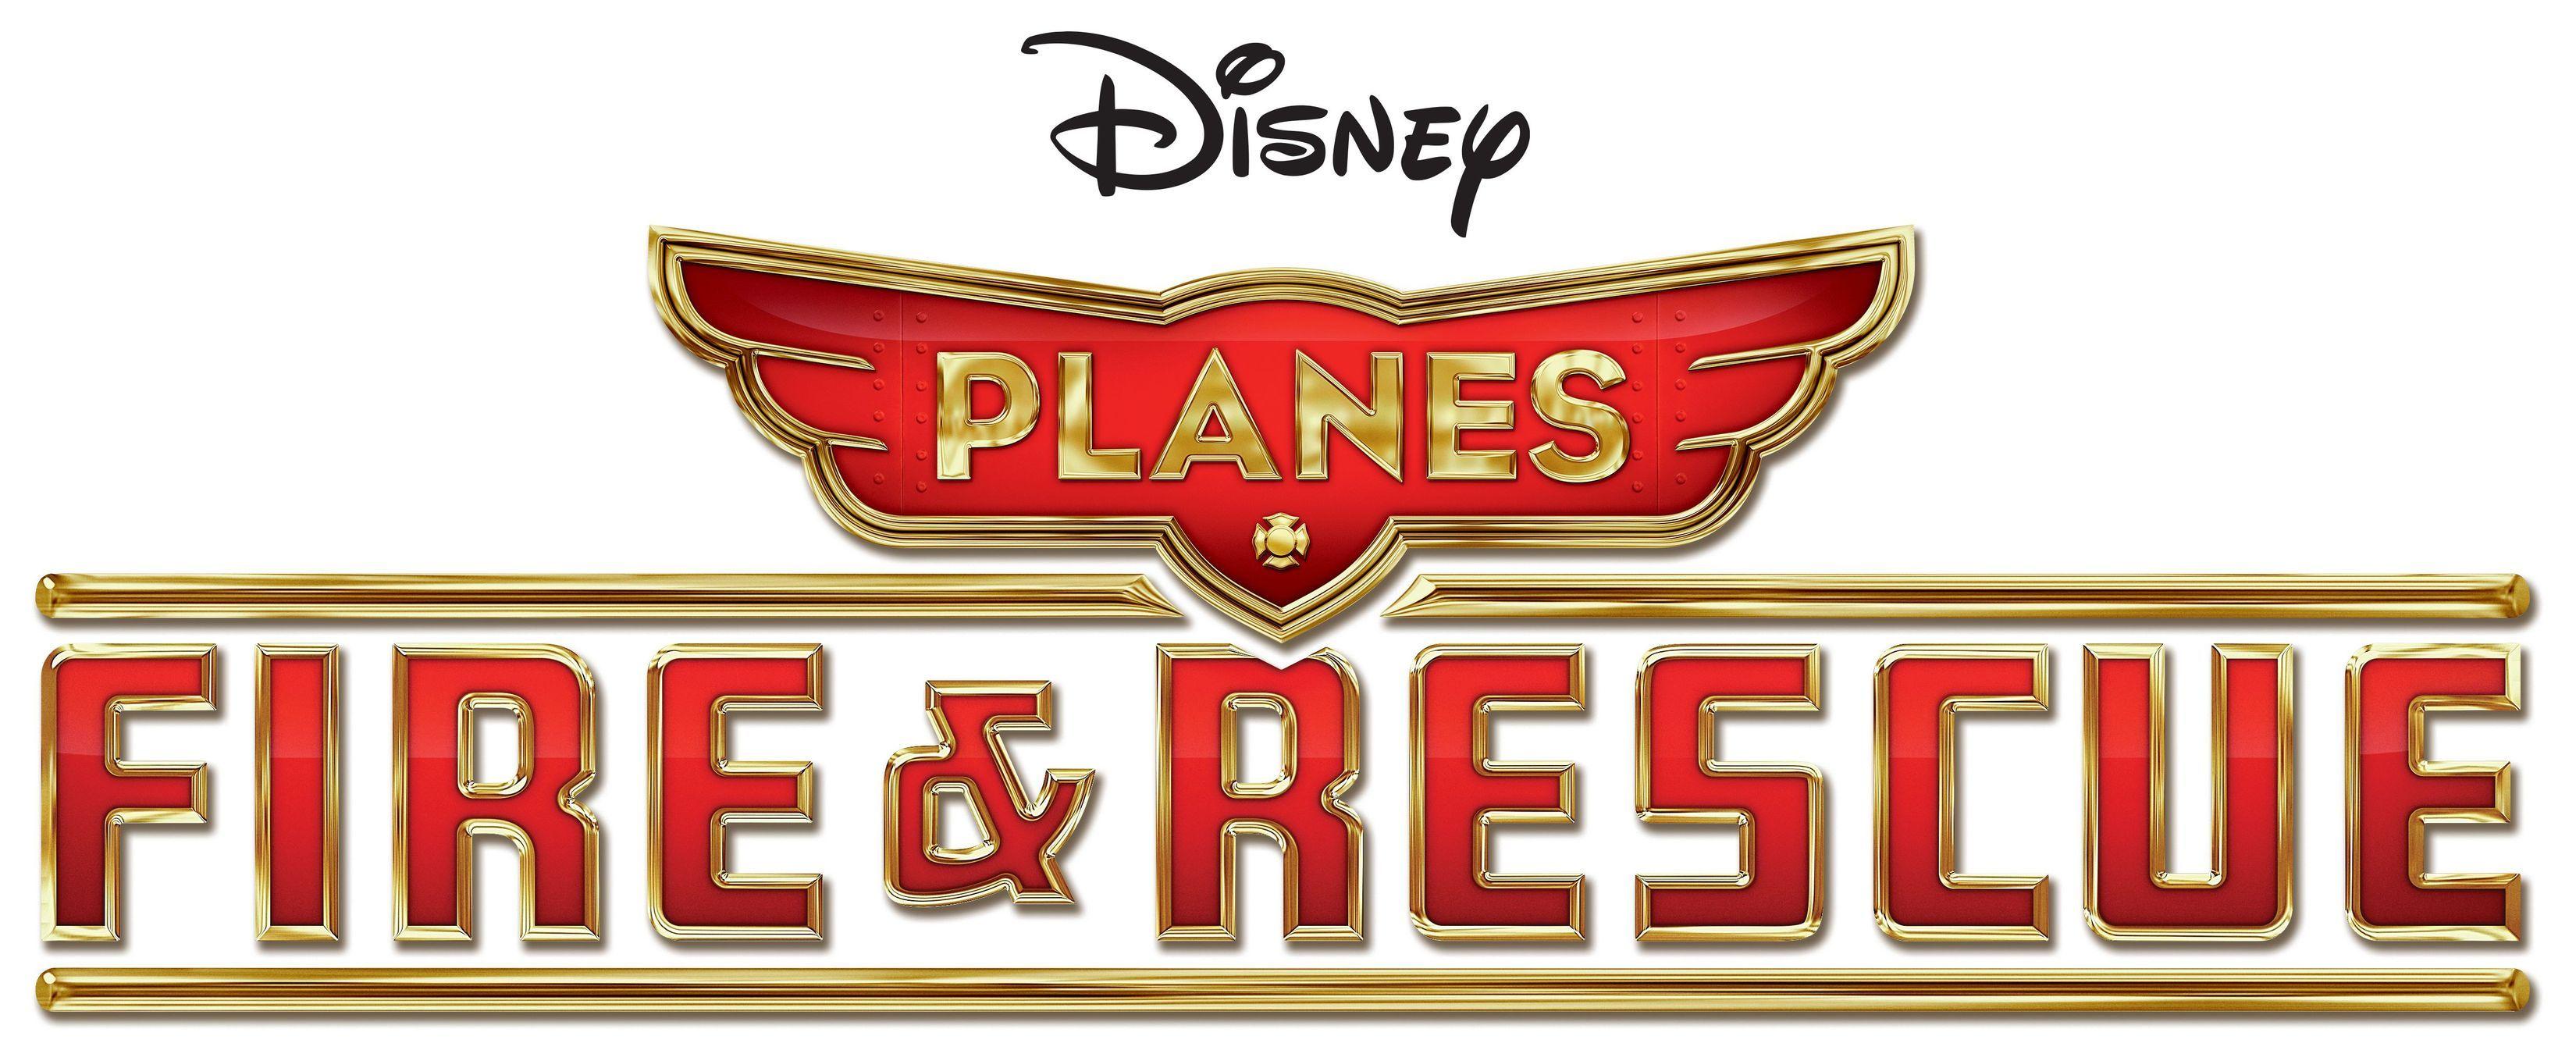 Disney Planes Logo - Rollback Prices On Disney Planes Items at Walmart ...